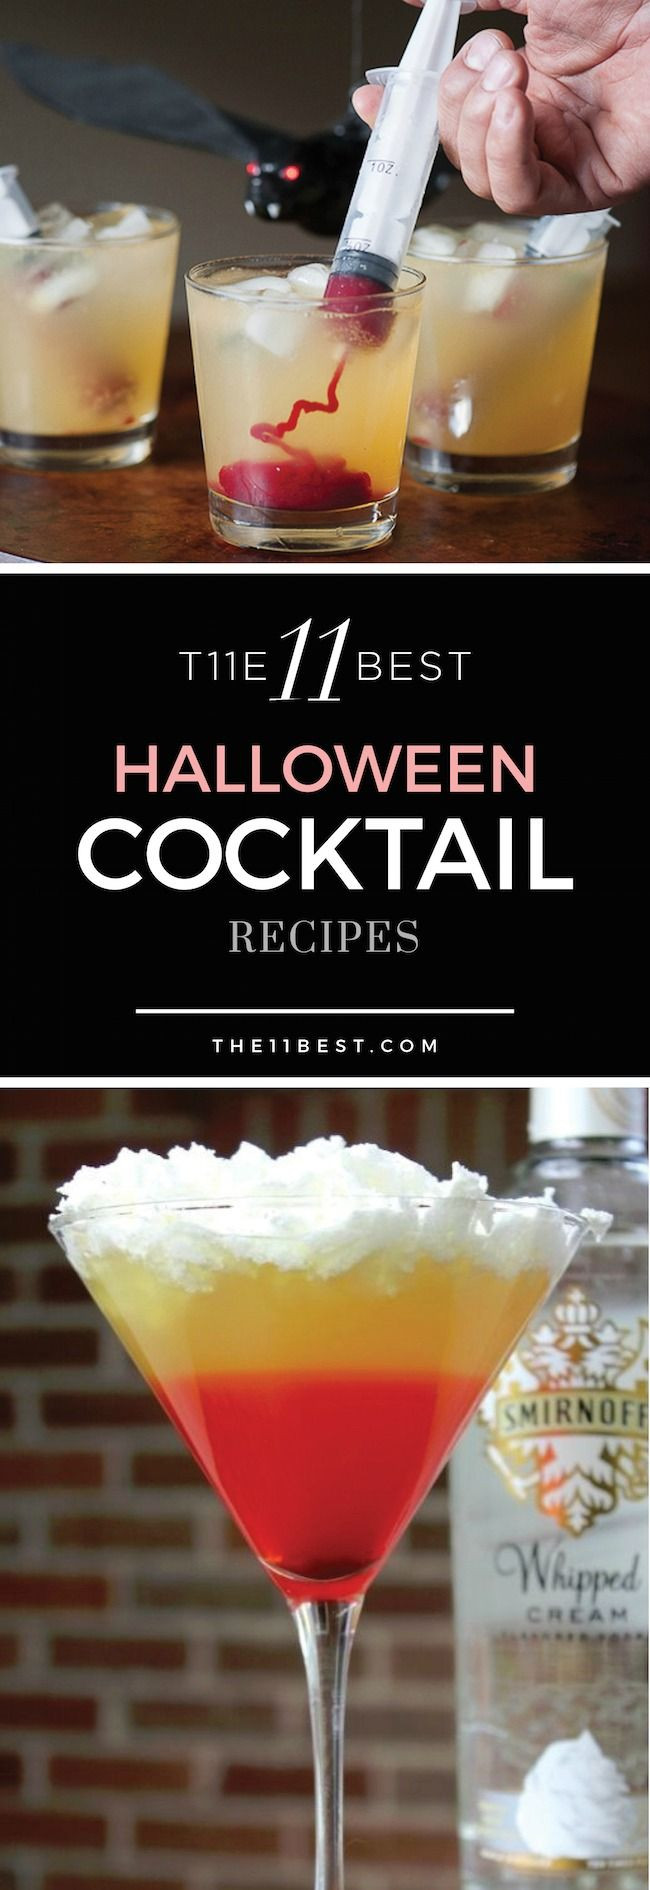 Halloween Drinks Pinterest
 Best 25 Halloween cocktails ideas on Pinterest